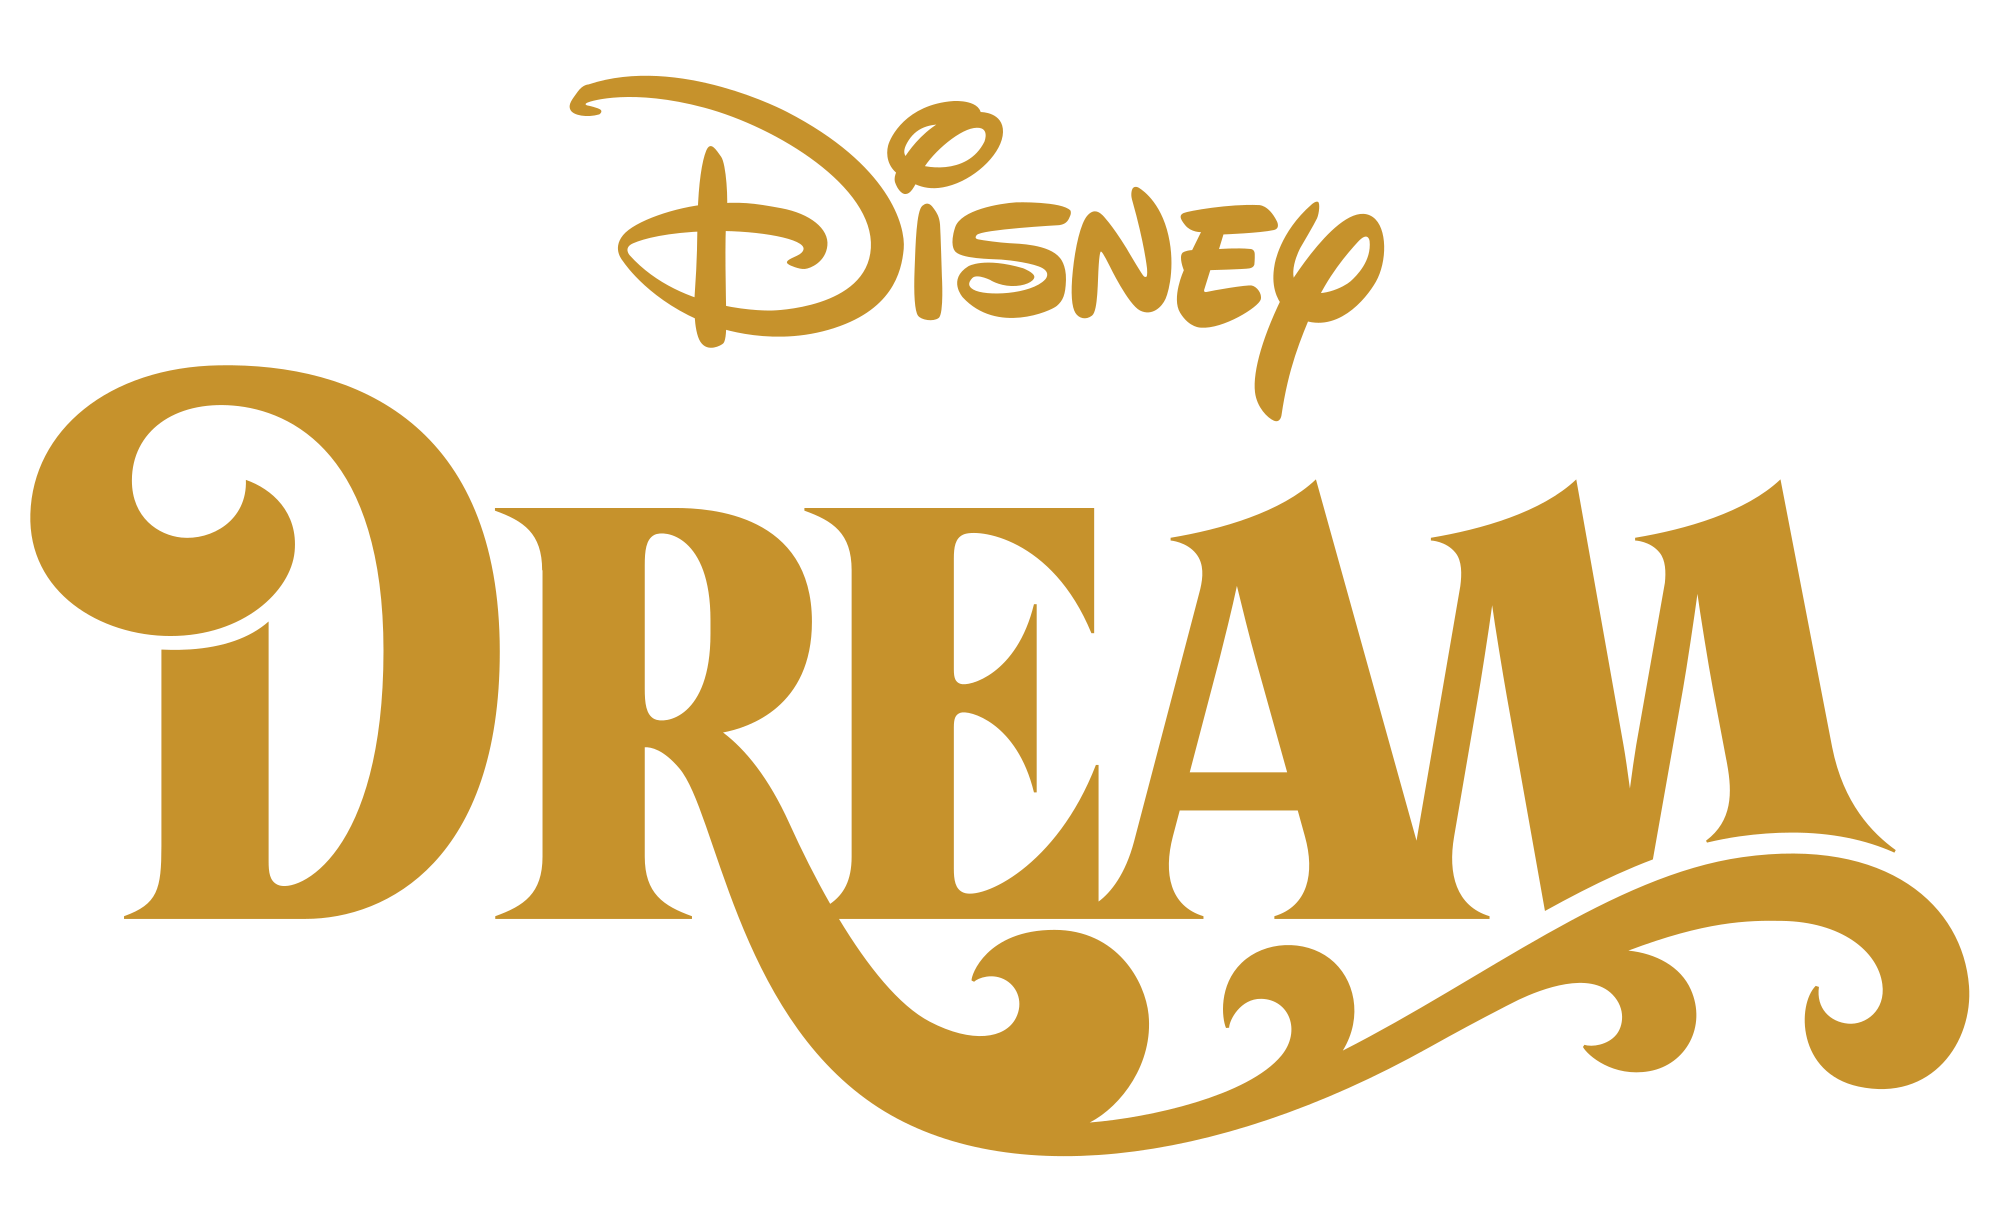 disney cruise dream logo